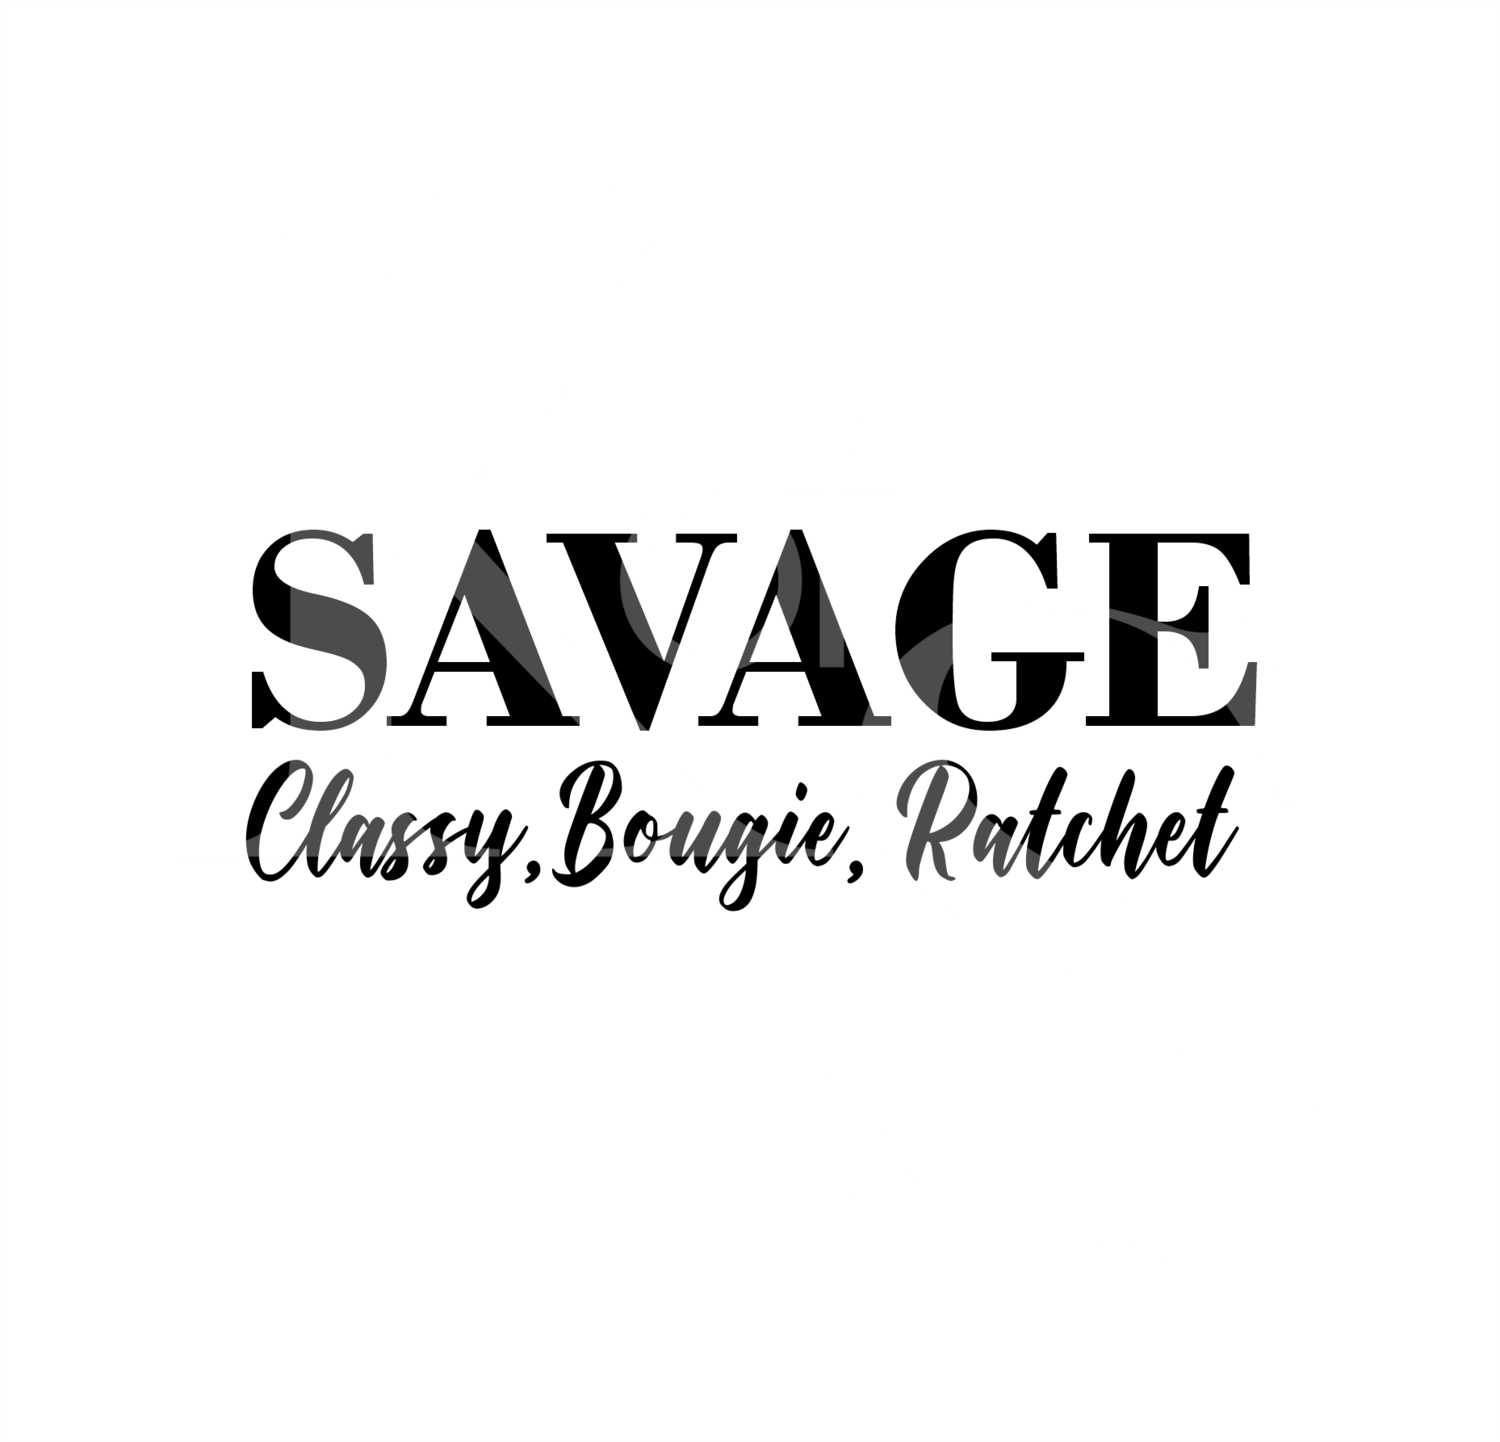 Savage Classy Bougie Ratchet SVG, Savage Cut File, Eps, Svg, Dxf, Svg File for Cricut, Silhouette Svg